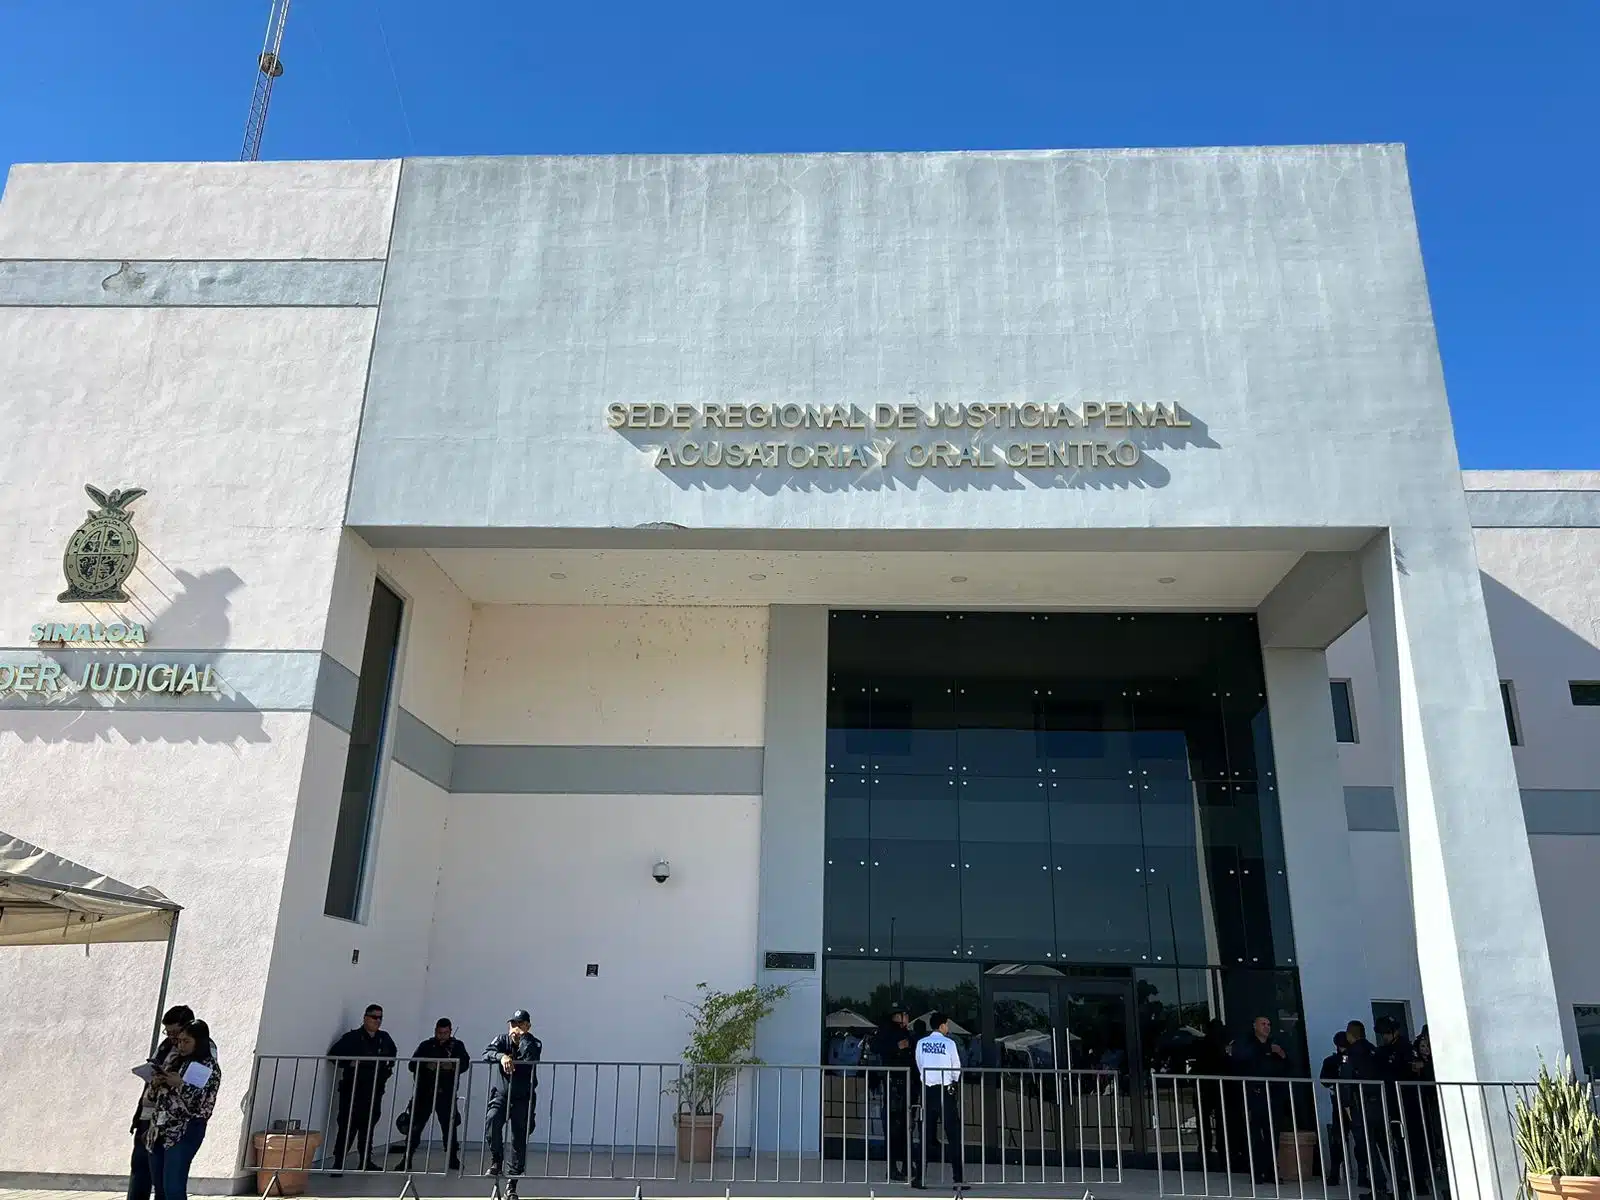 Exterior de Sede Regional de Justicia Penal Acusatoria Oral Centro